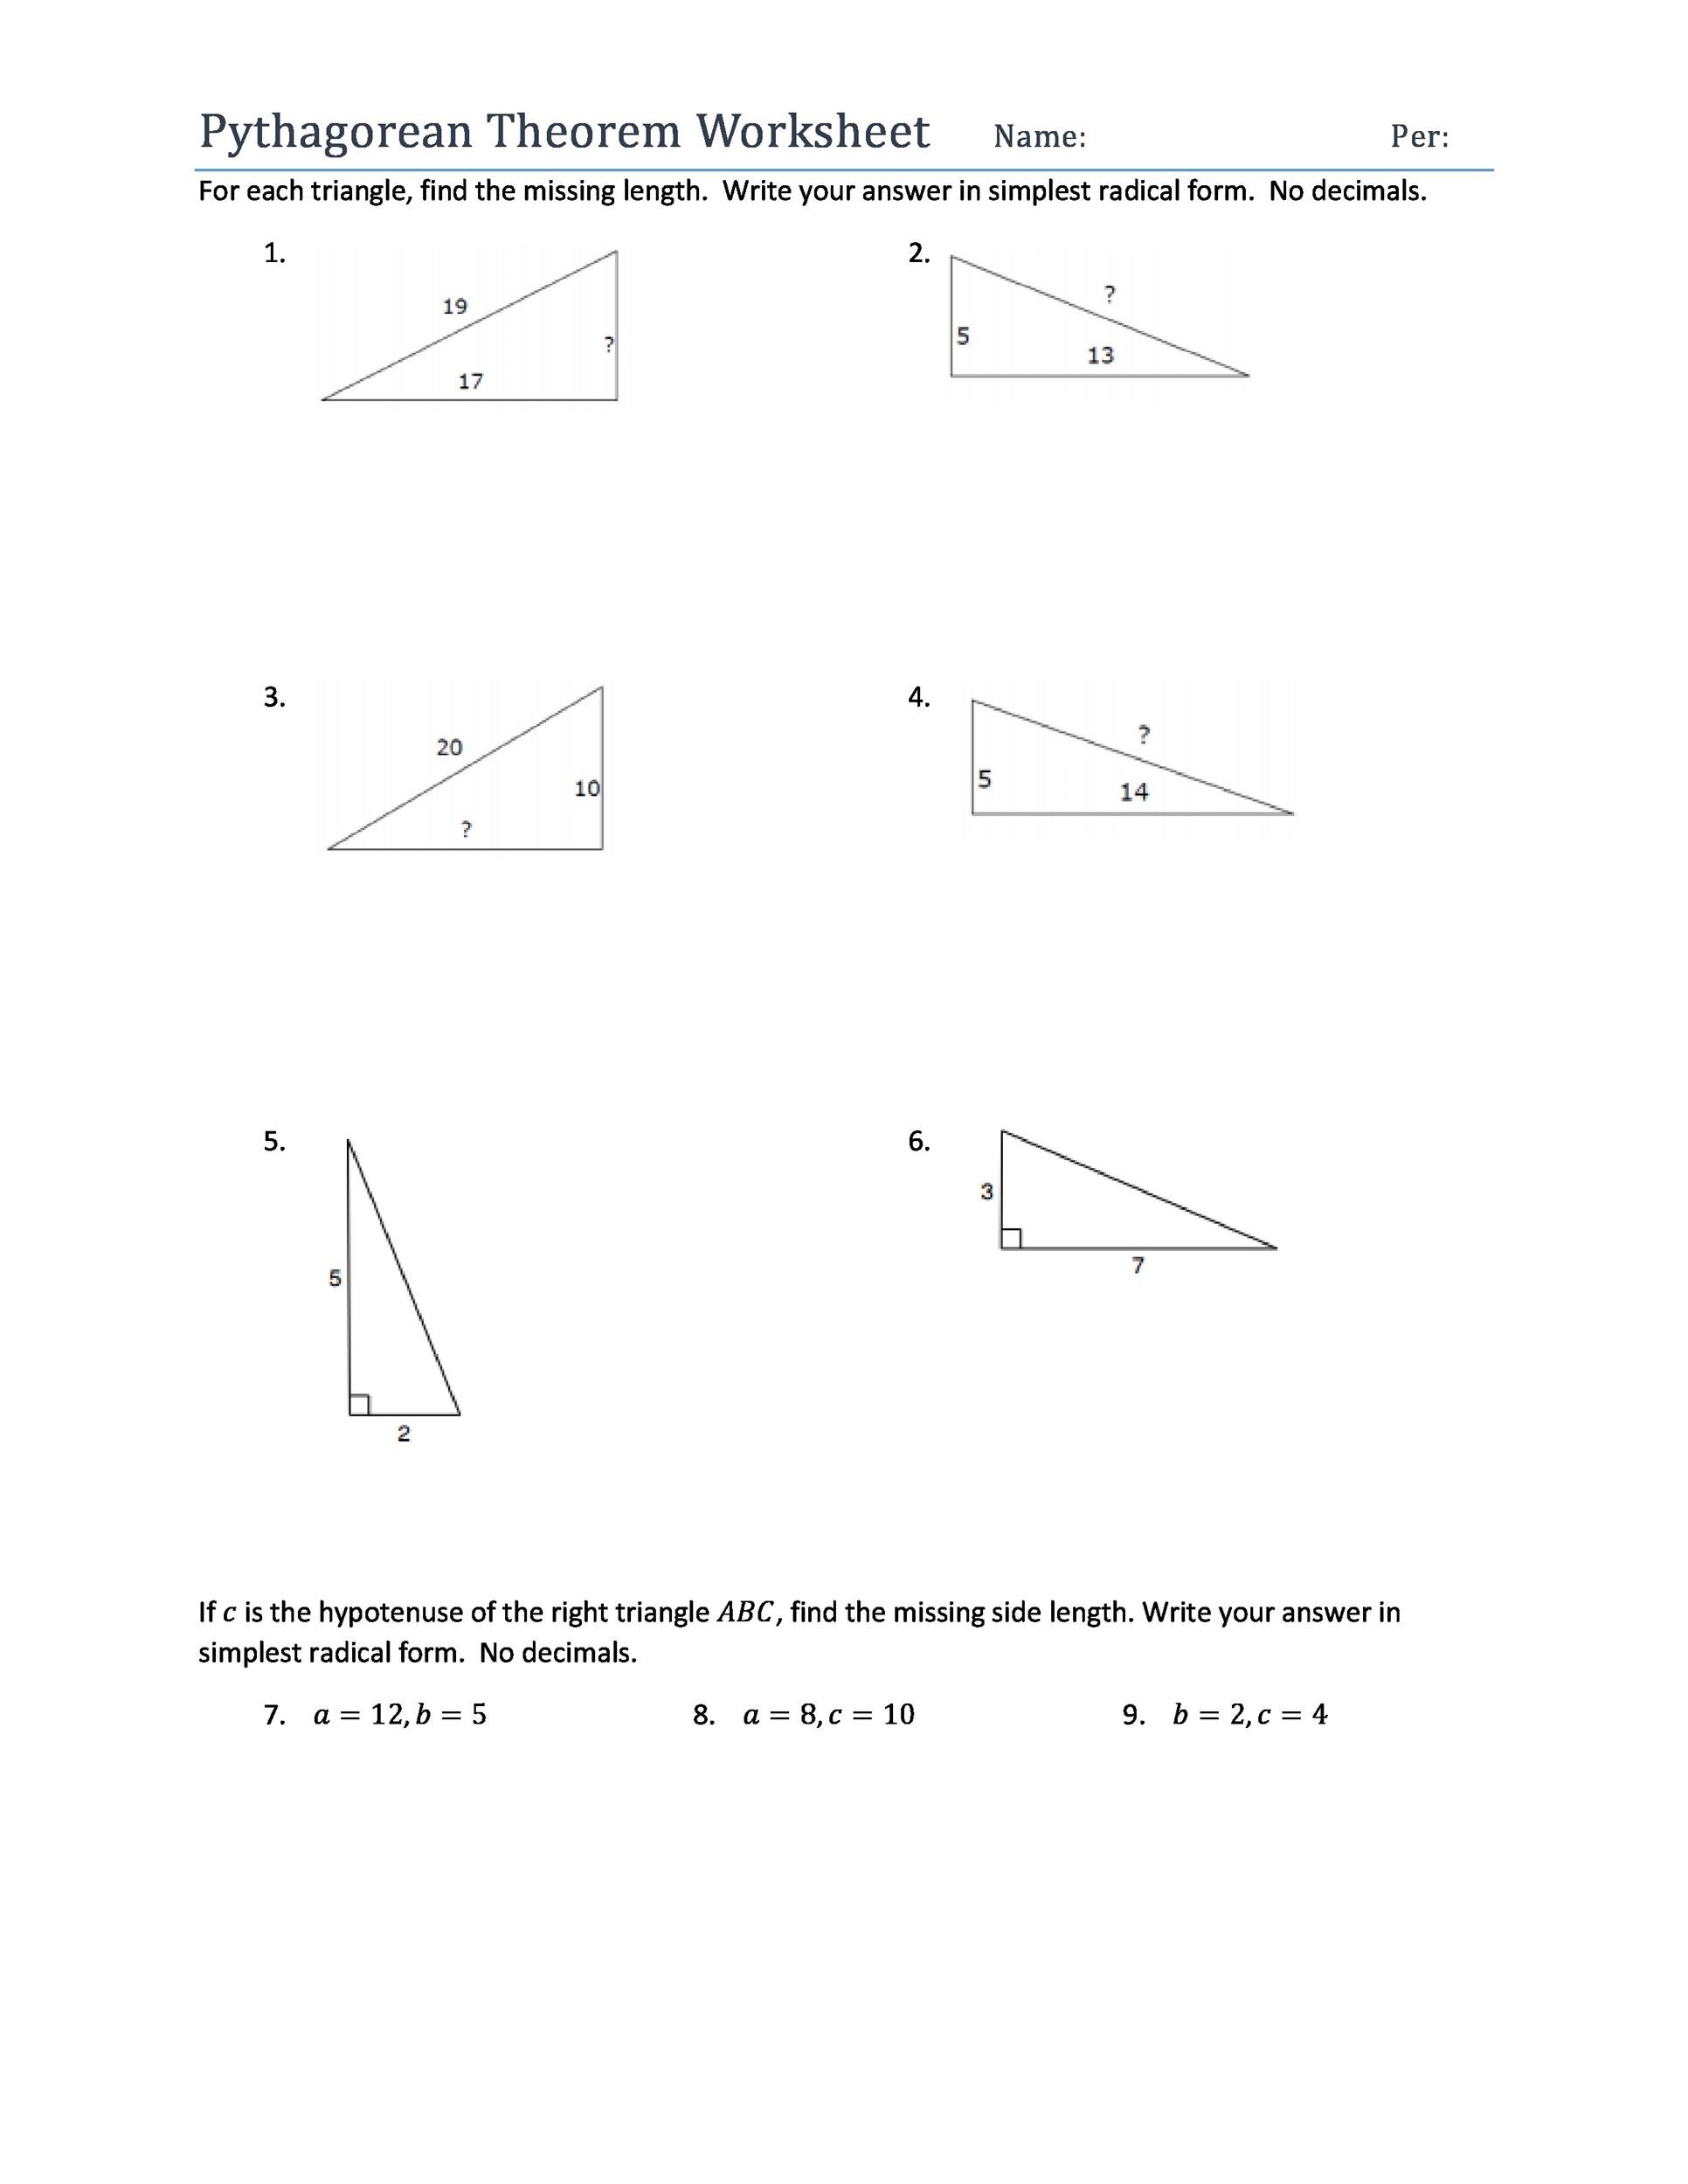 pythagoras-theorem-worksheet-pdf